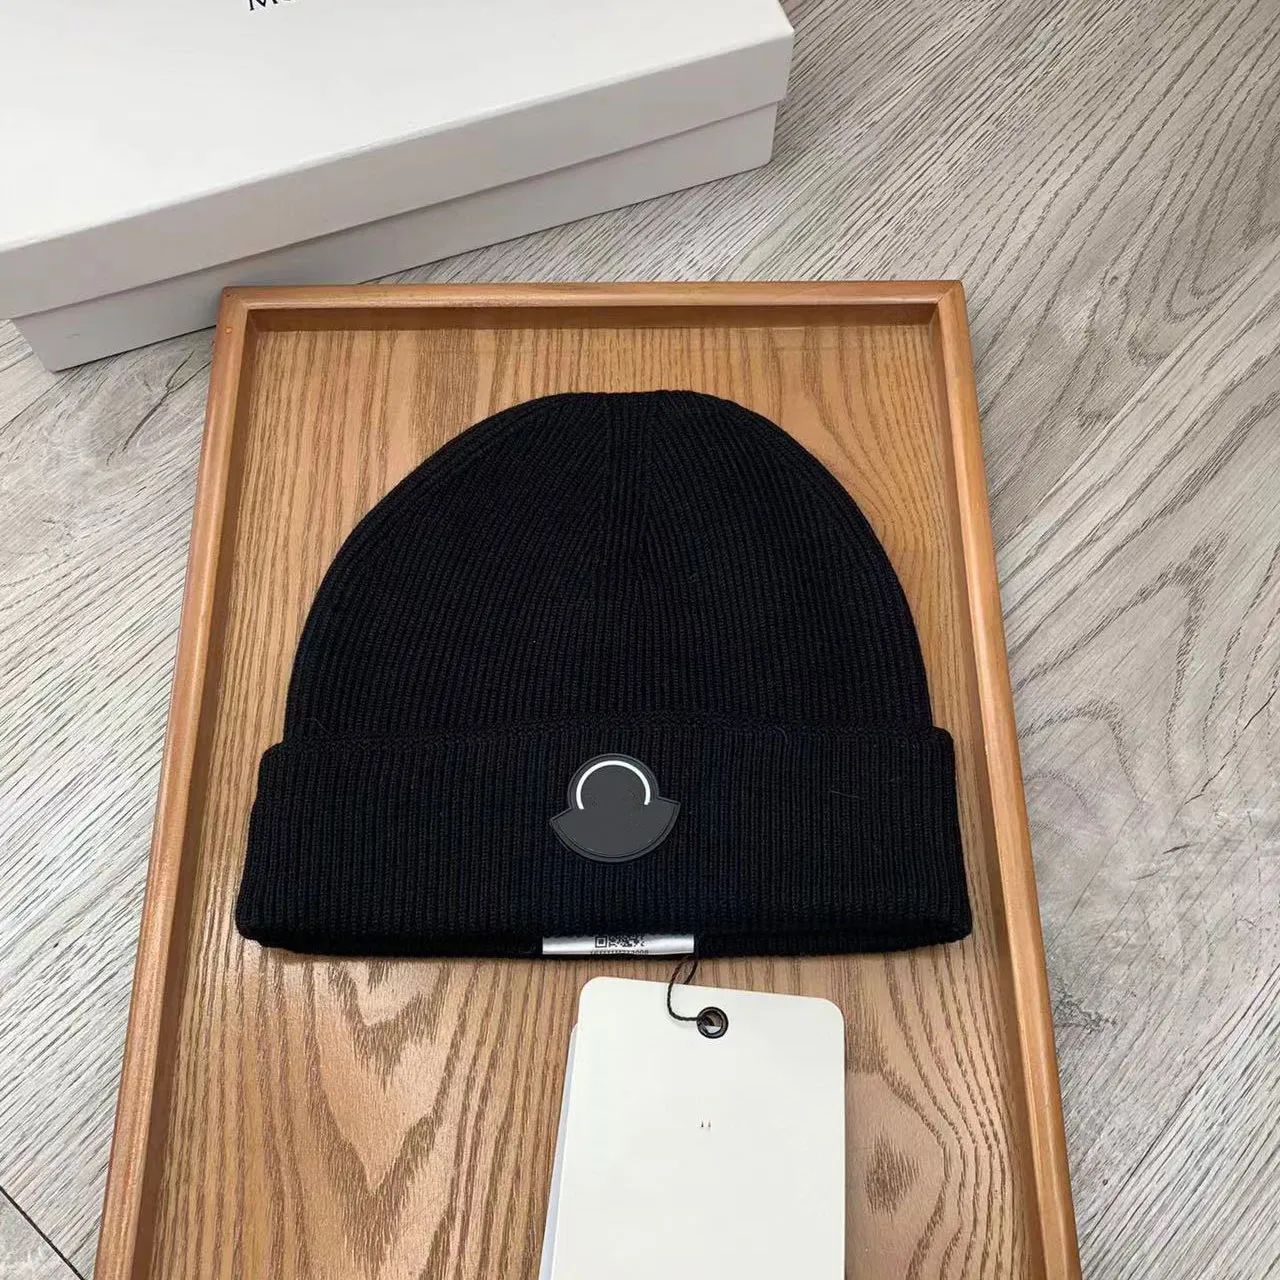 designer Beanie Luxury Hat kull Cap Winter Unisex Cashmere Letters Casual Outdoor Bonnet Cappelli in maglia 15 colori ottimo regalo